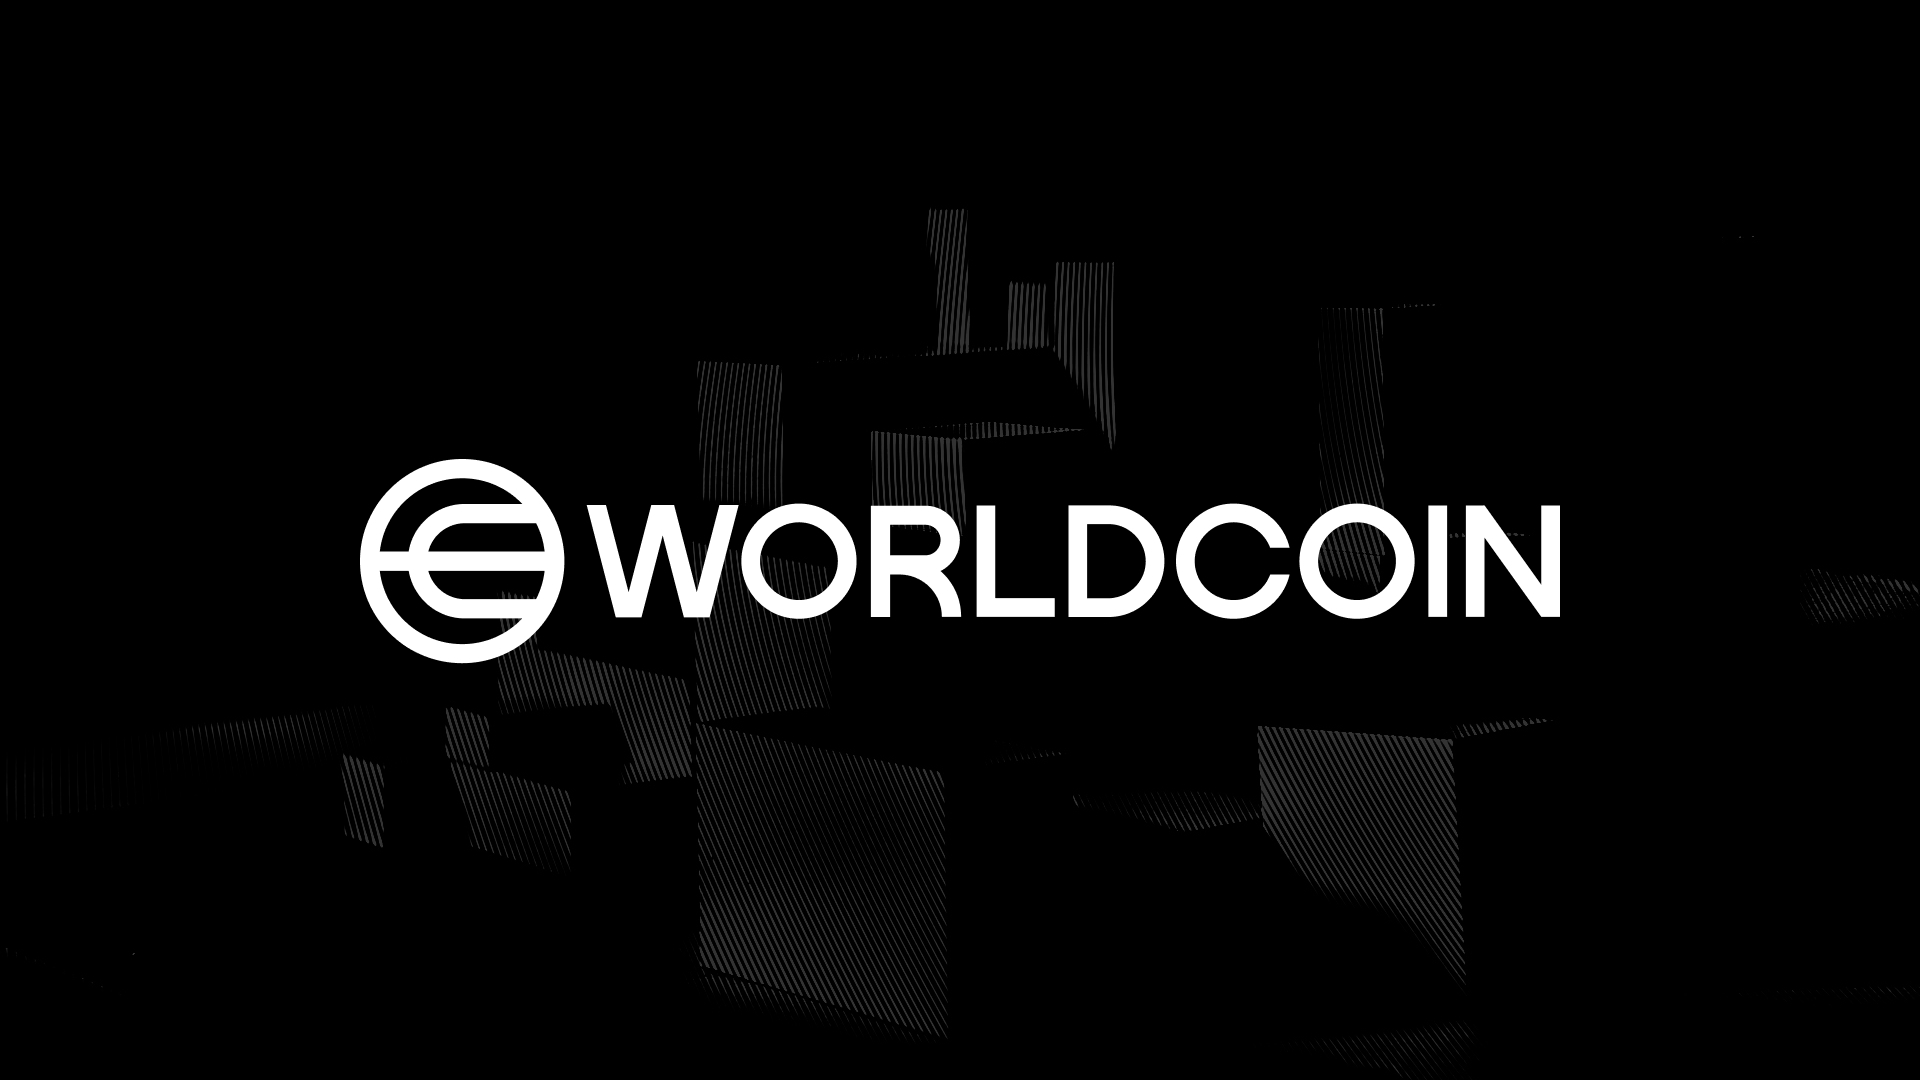 Worldcoin Sign-Ups Cross 2M